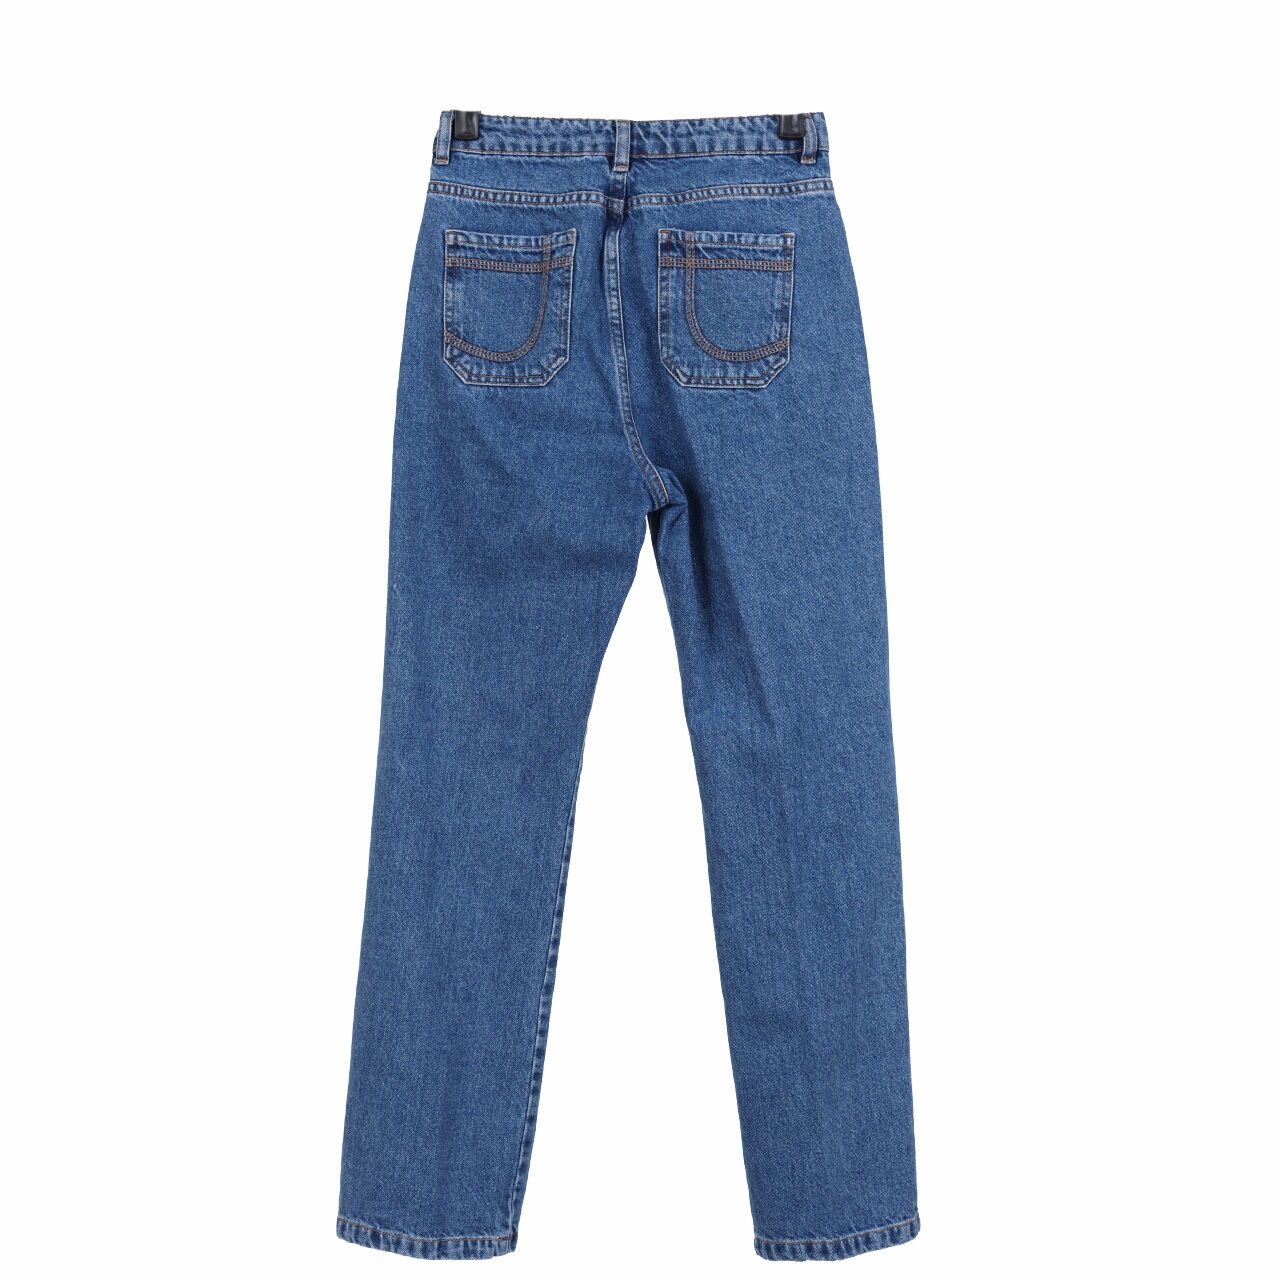 Tara Jarmon Blue Long Pants Jeans